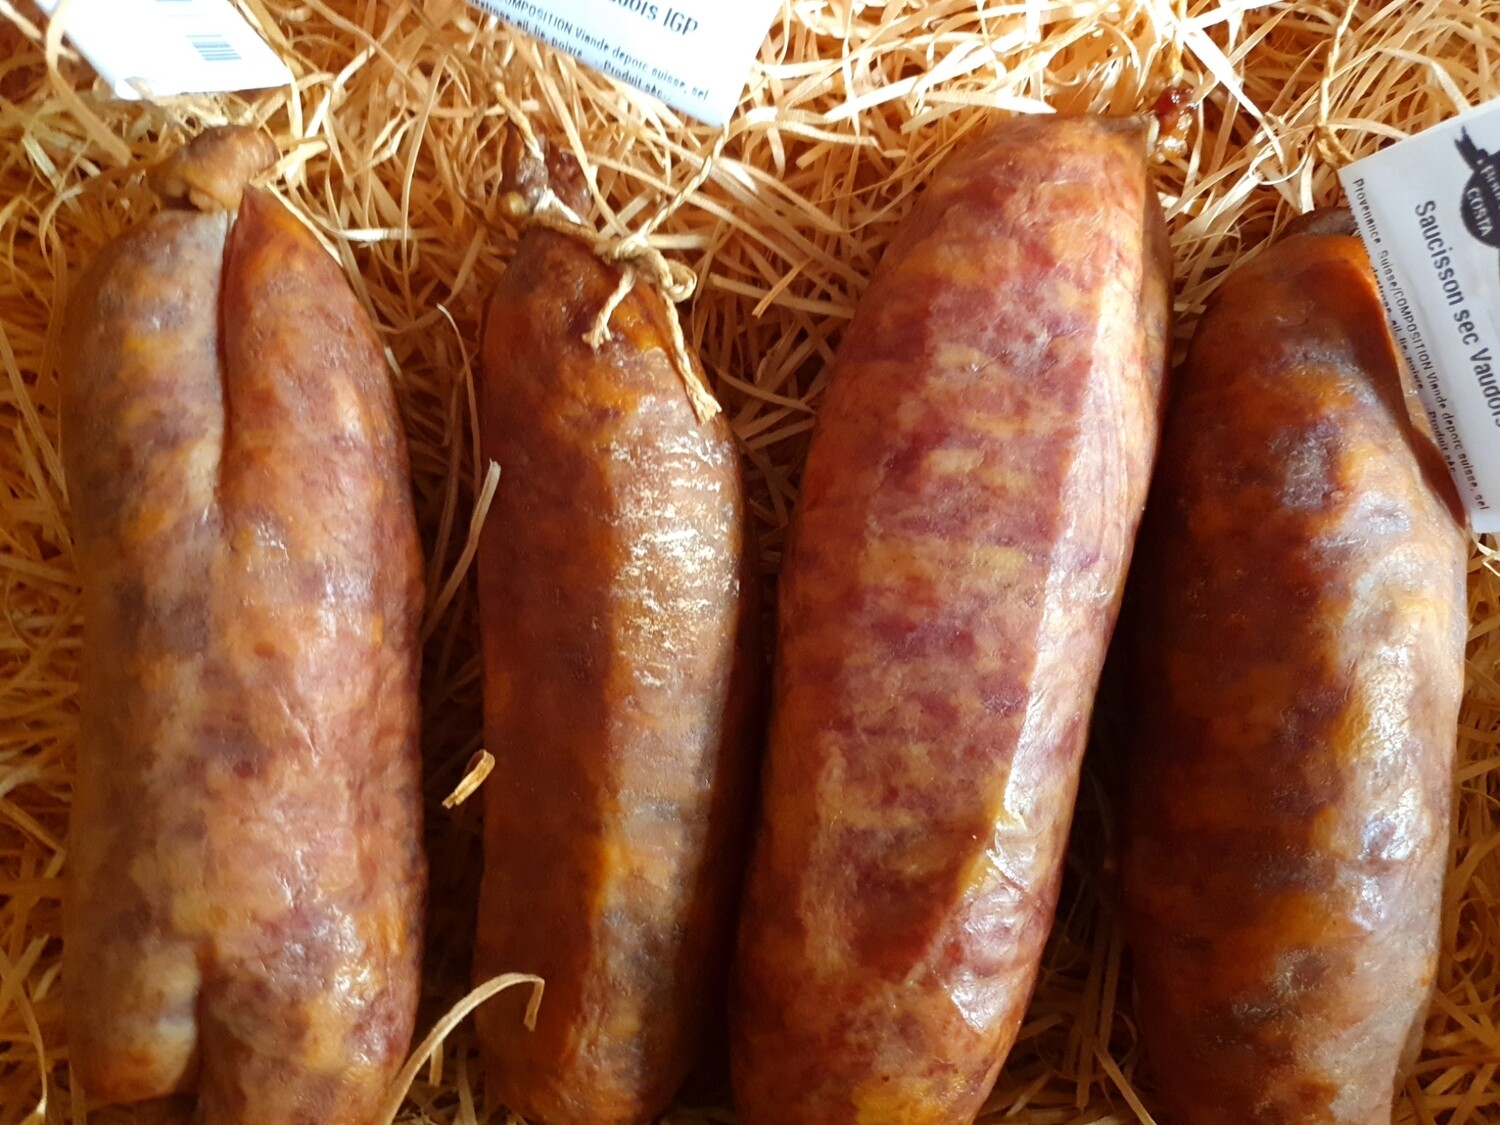 IGP Vaud dry sausage (Switzerland)